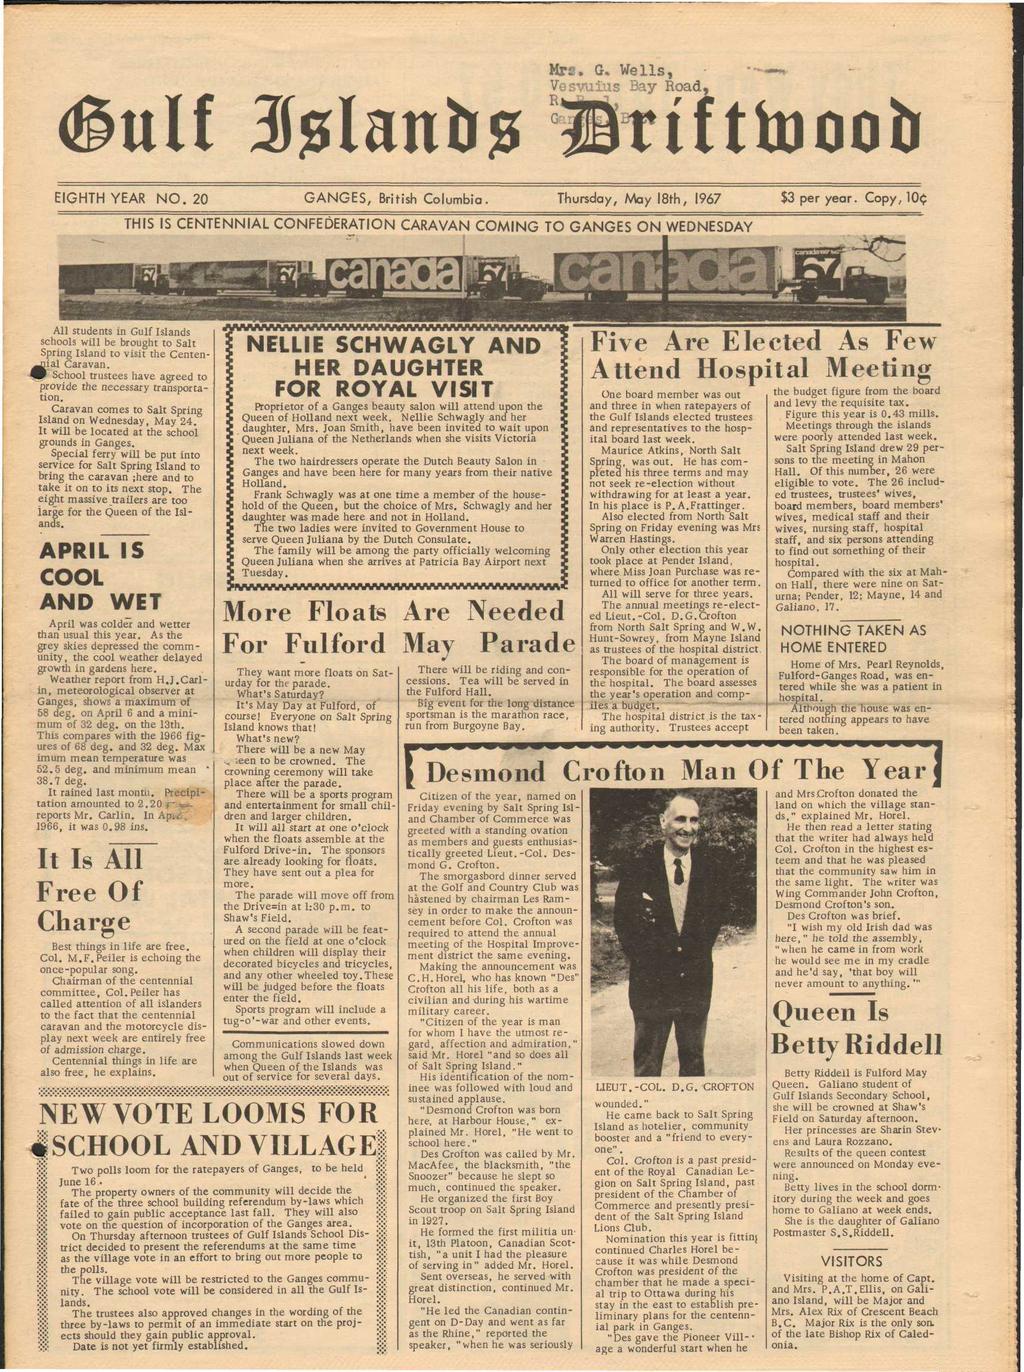 ulf Htelantr? Hrs. G, Wells, Vesvuius Bay Road EIGHTH YEAR NO. 20 GANGES, British Columbia. Thursday, May 18th, 1967 $3 per year.